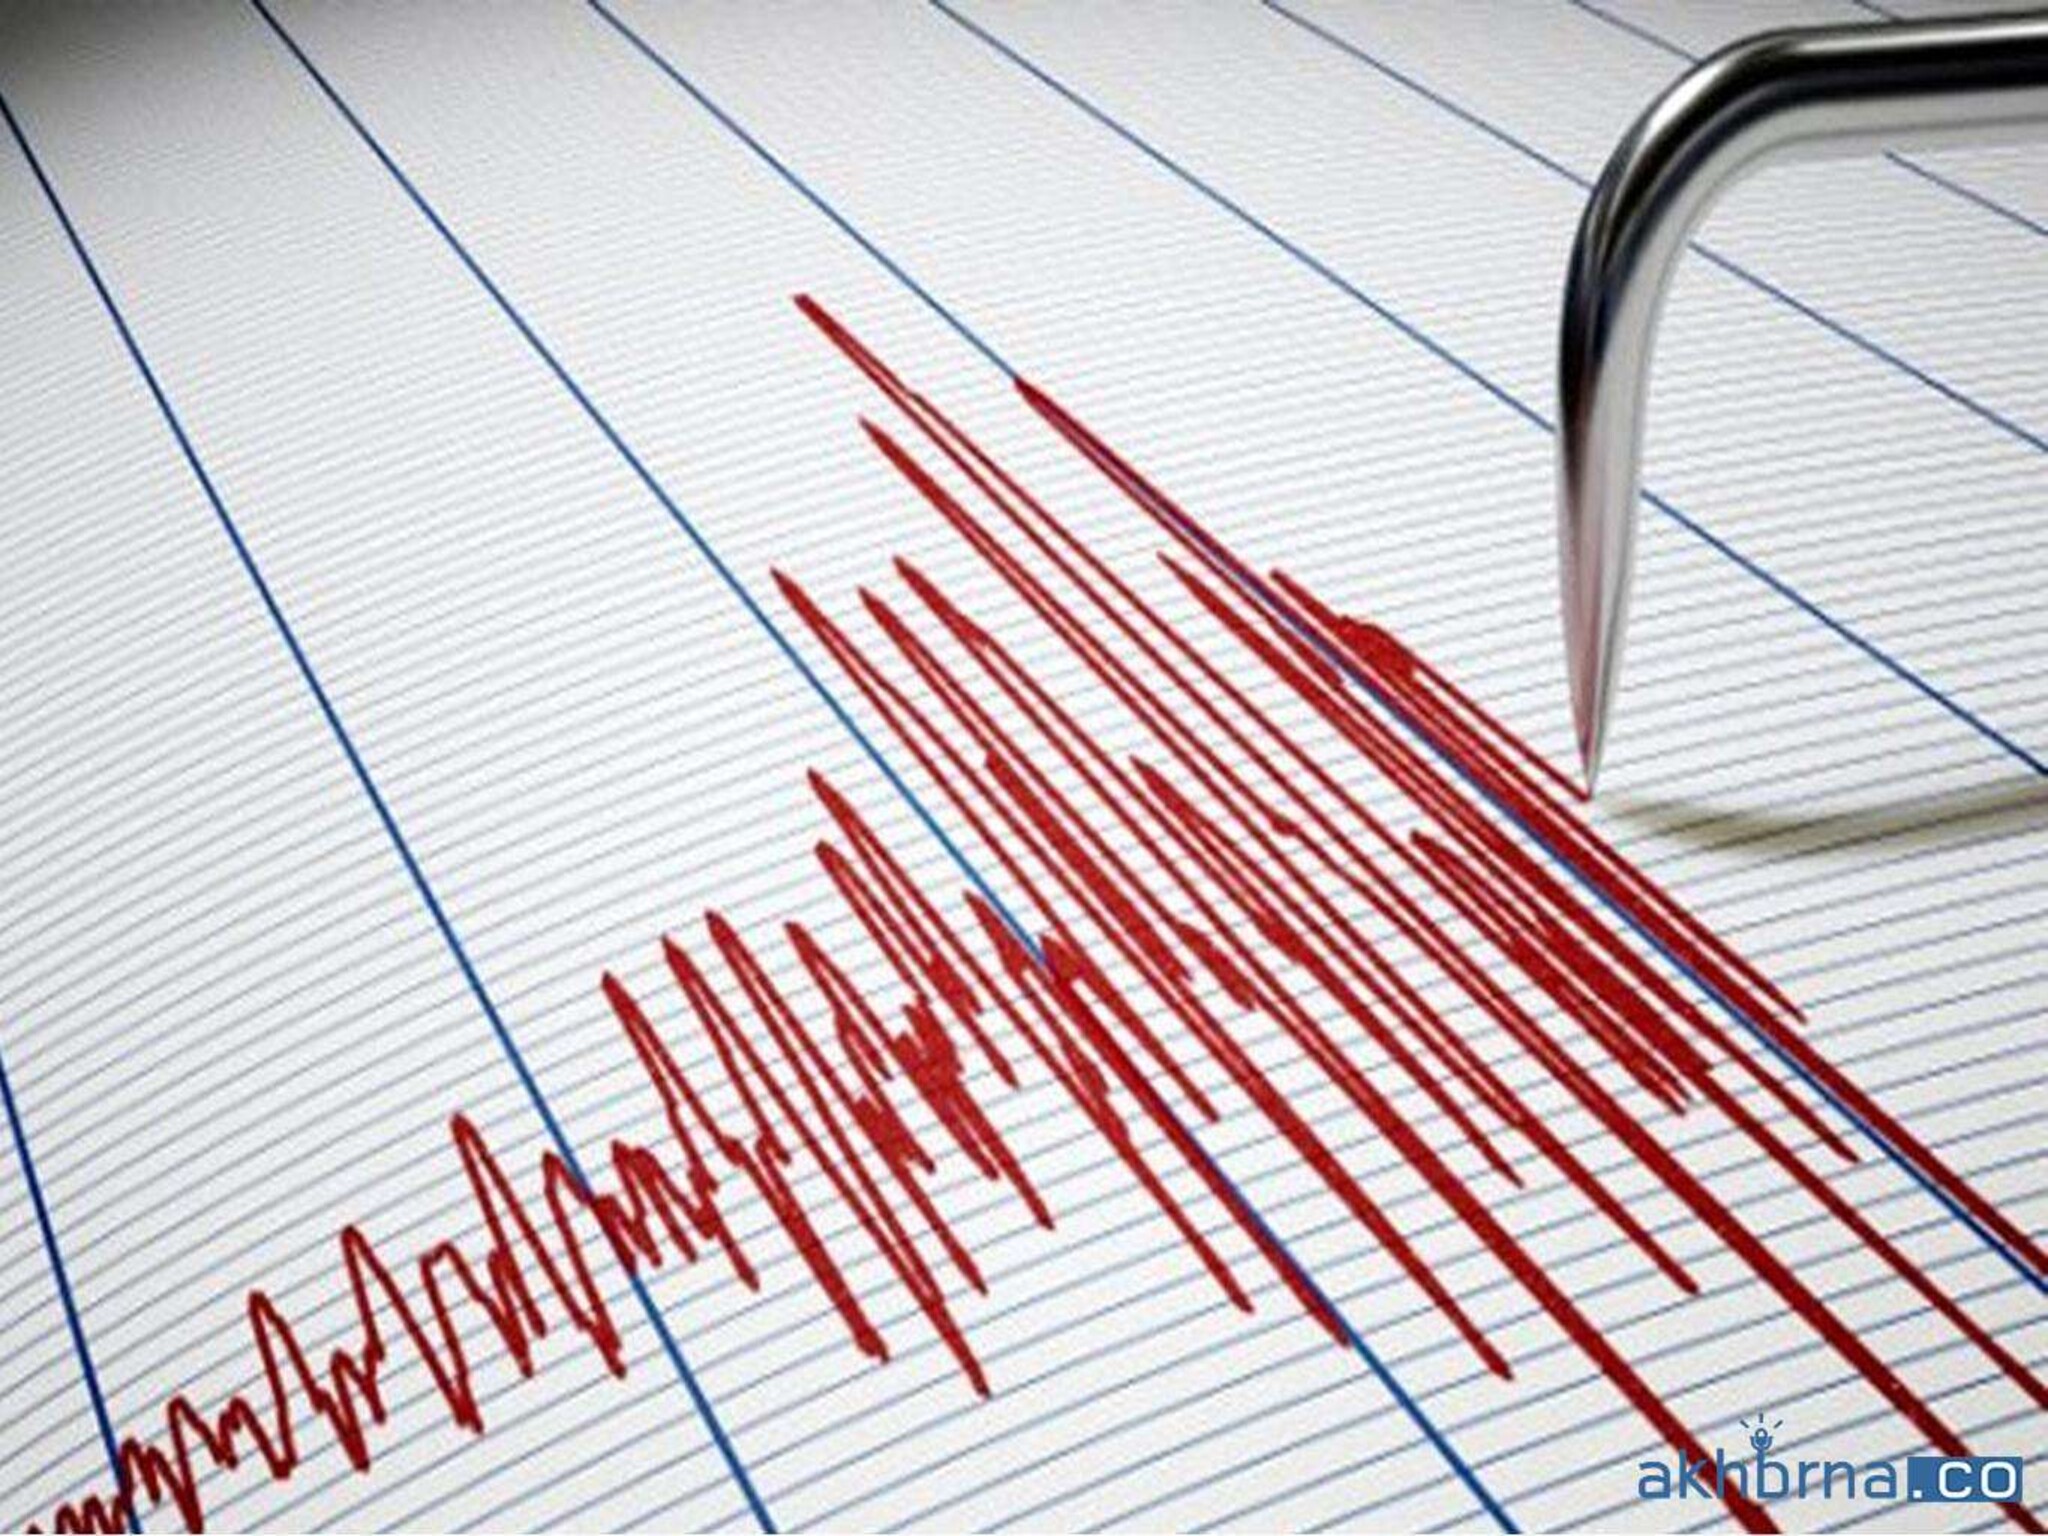 An earthquake measuring 5.3 magnitude shakes Papua New Guinea region